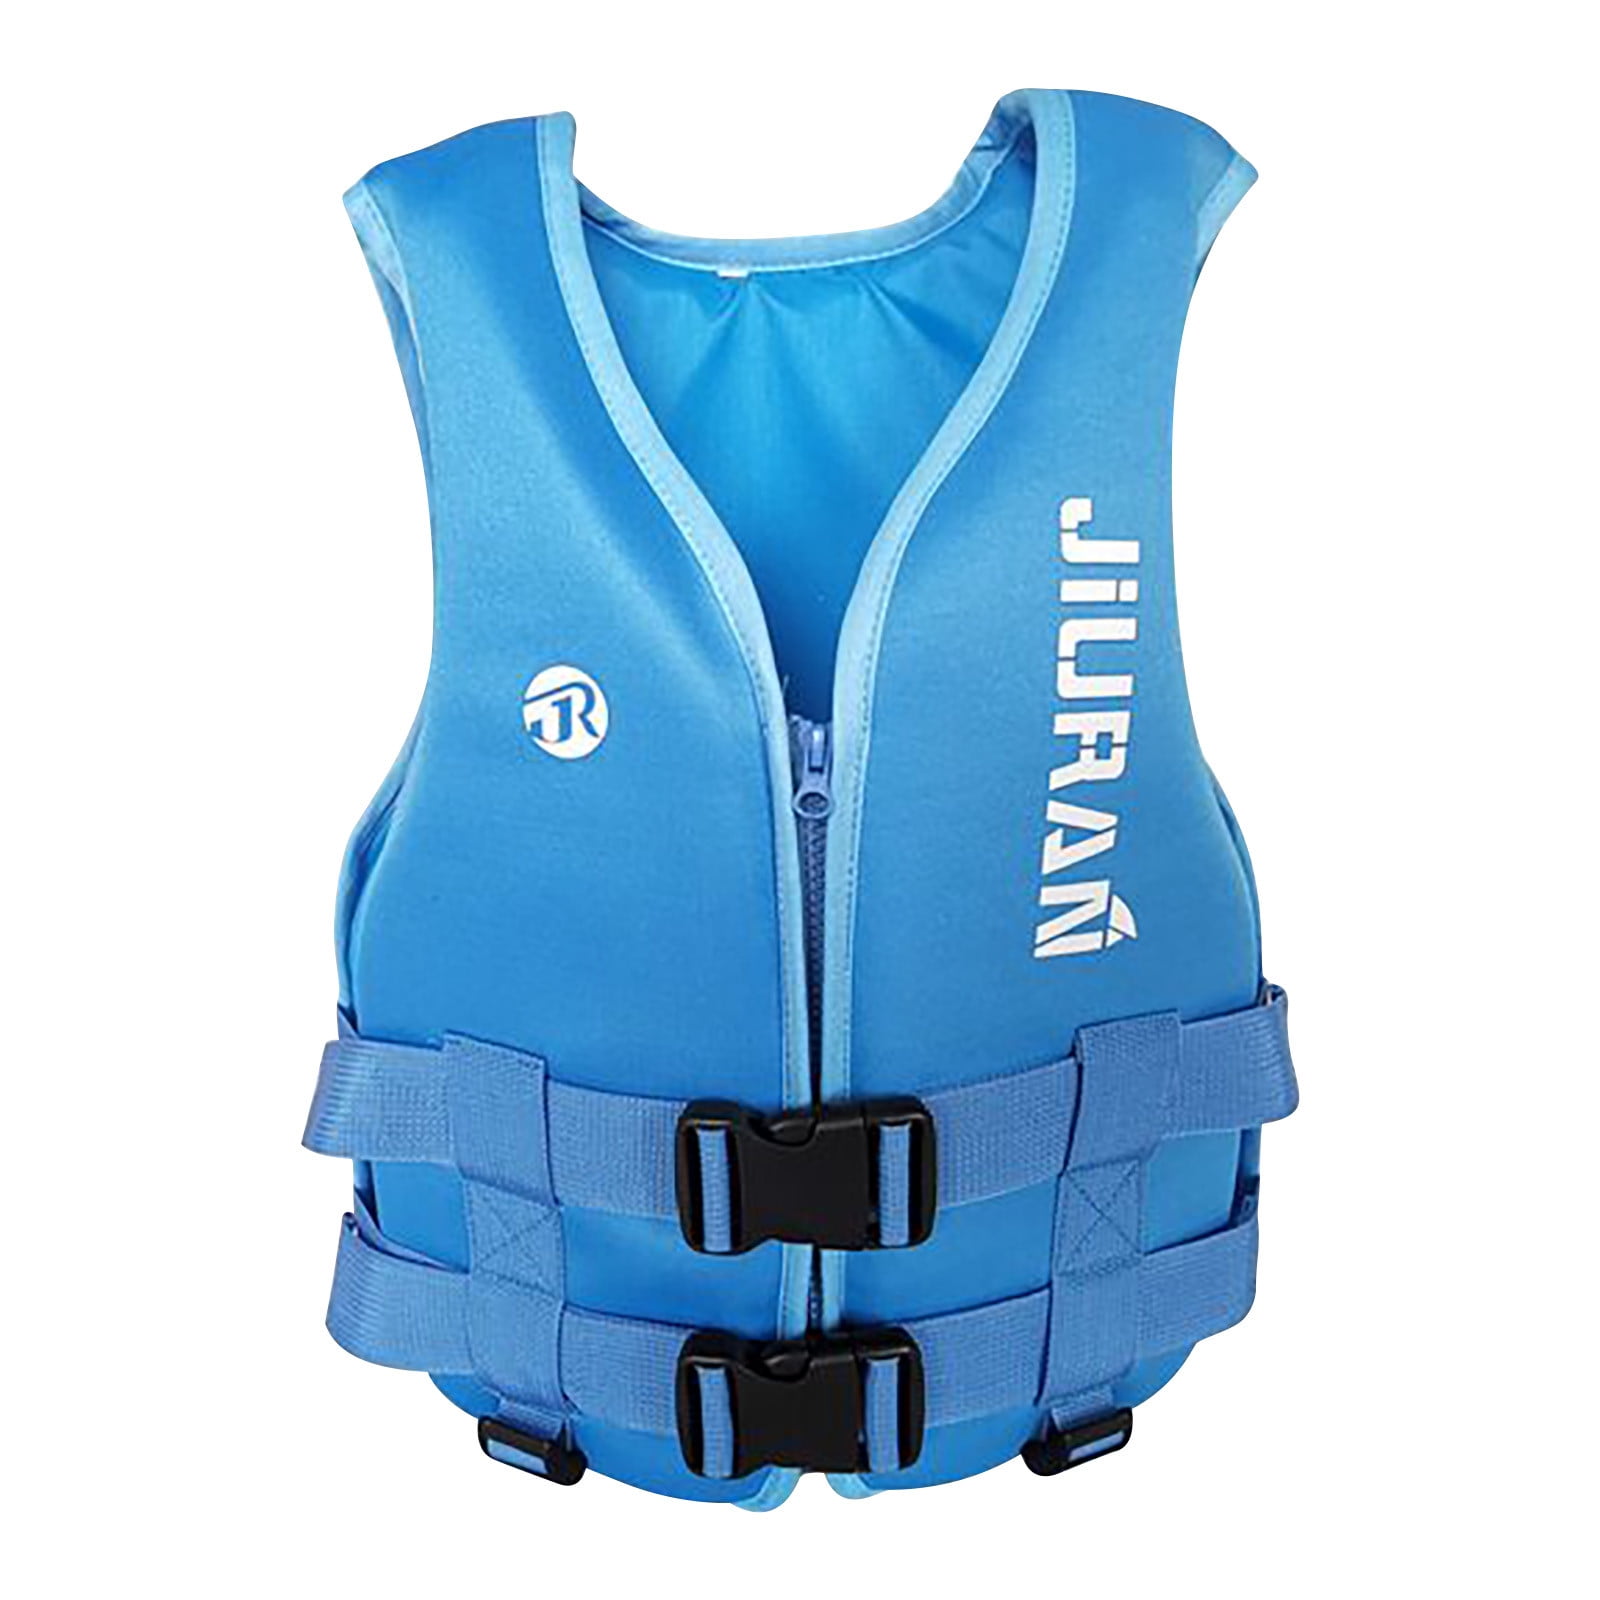 Details about   Swim Vest Neoprene Learn to Swim Float Jacket for Toddler Small Children Kids 